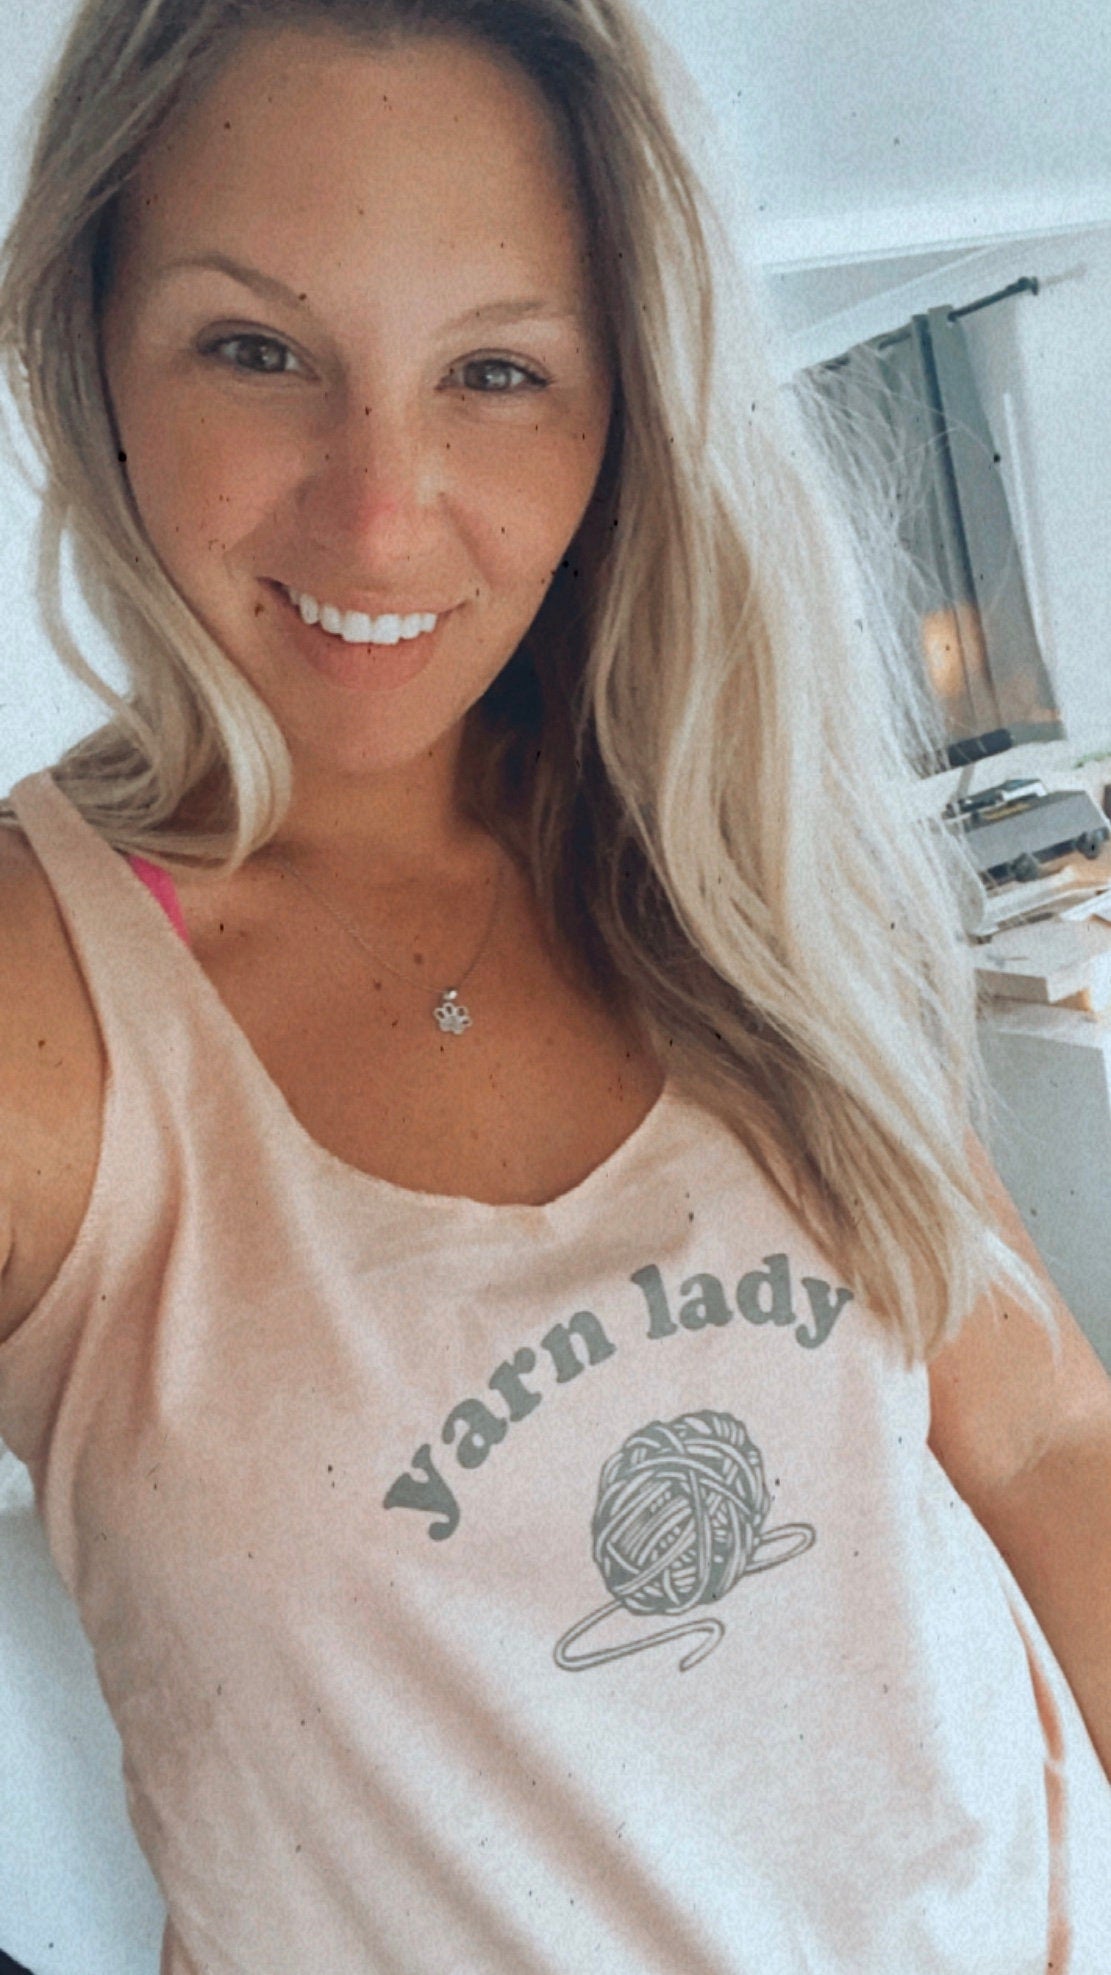 Yarn Lady Tank top Shirt